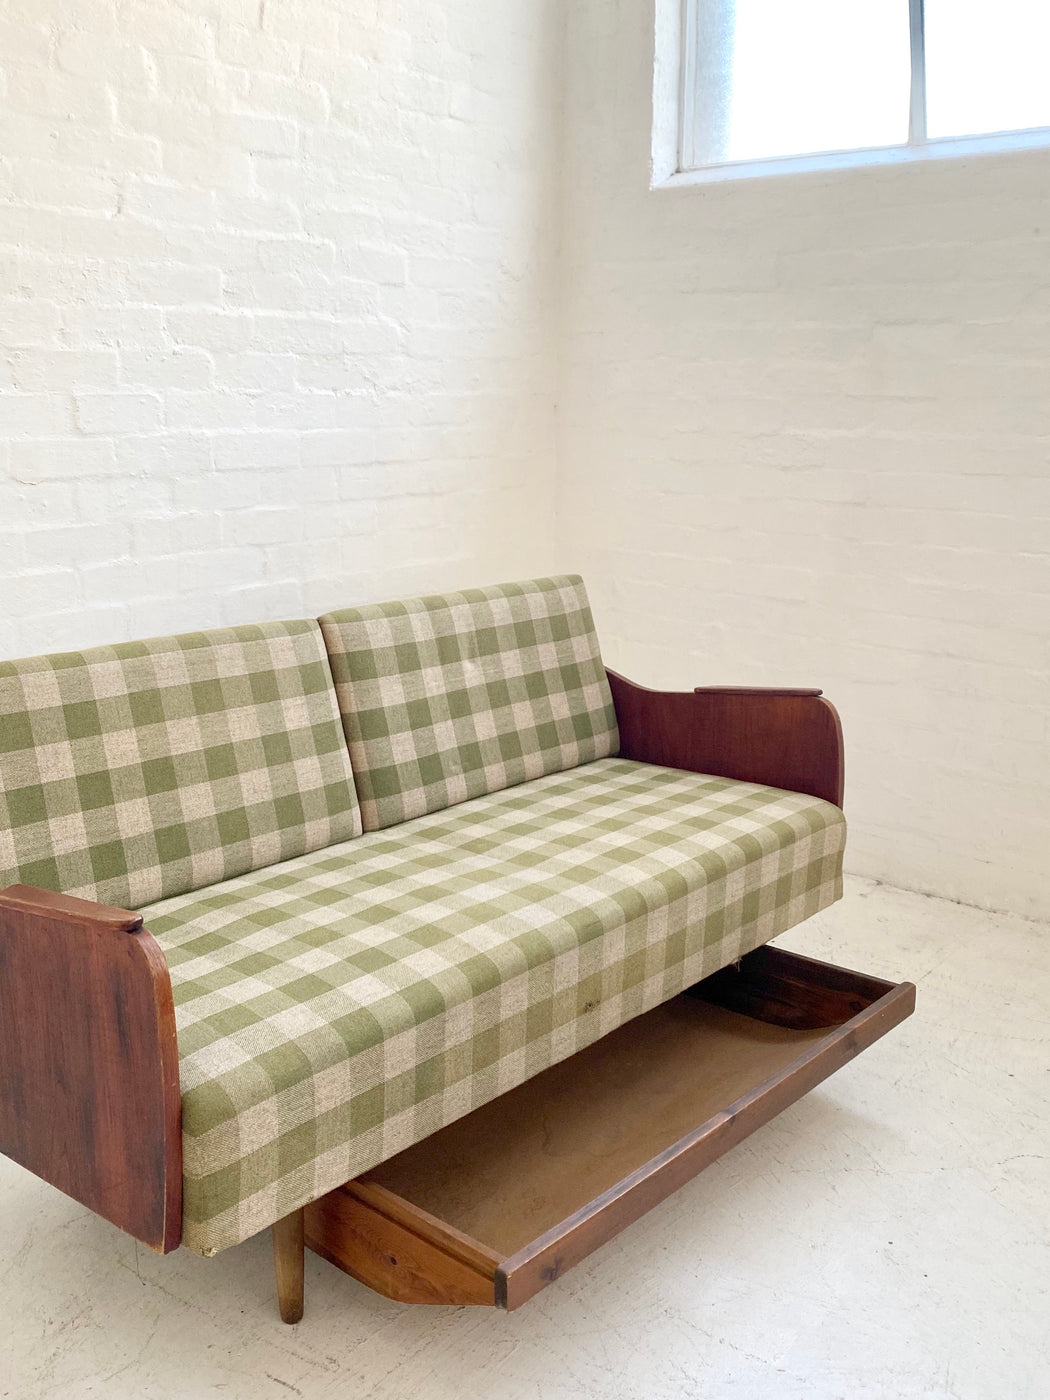 Classic Danish Sofa/Daybed